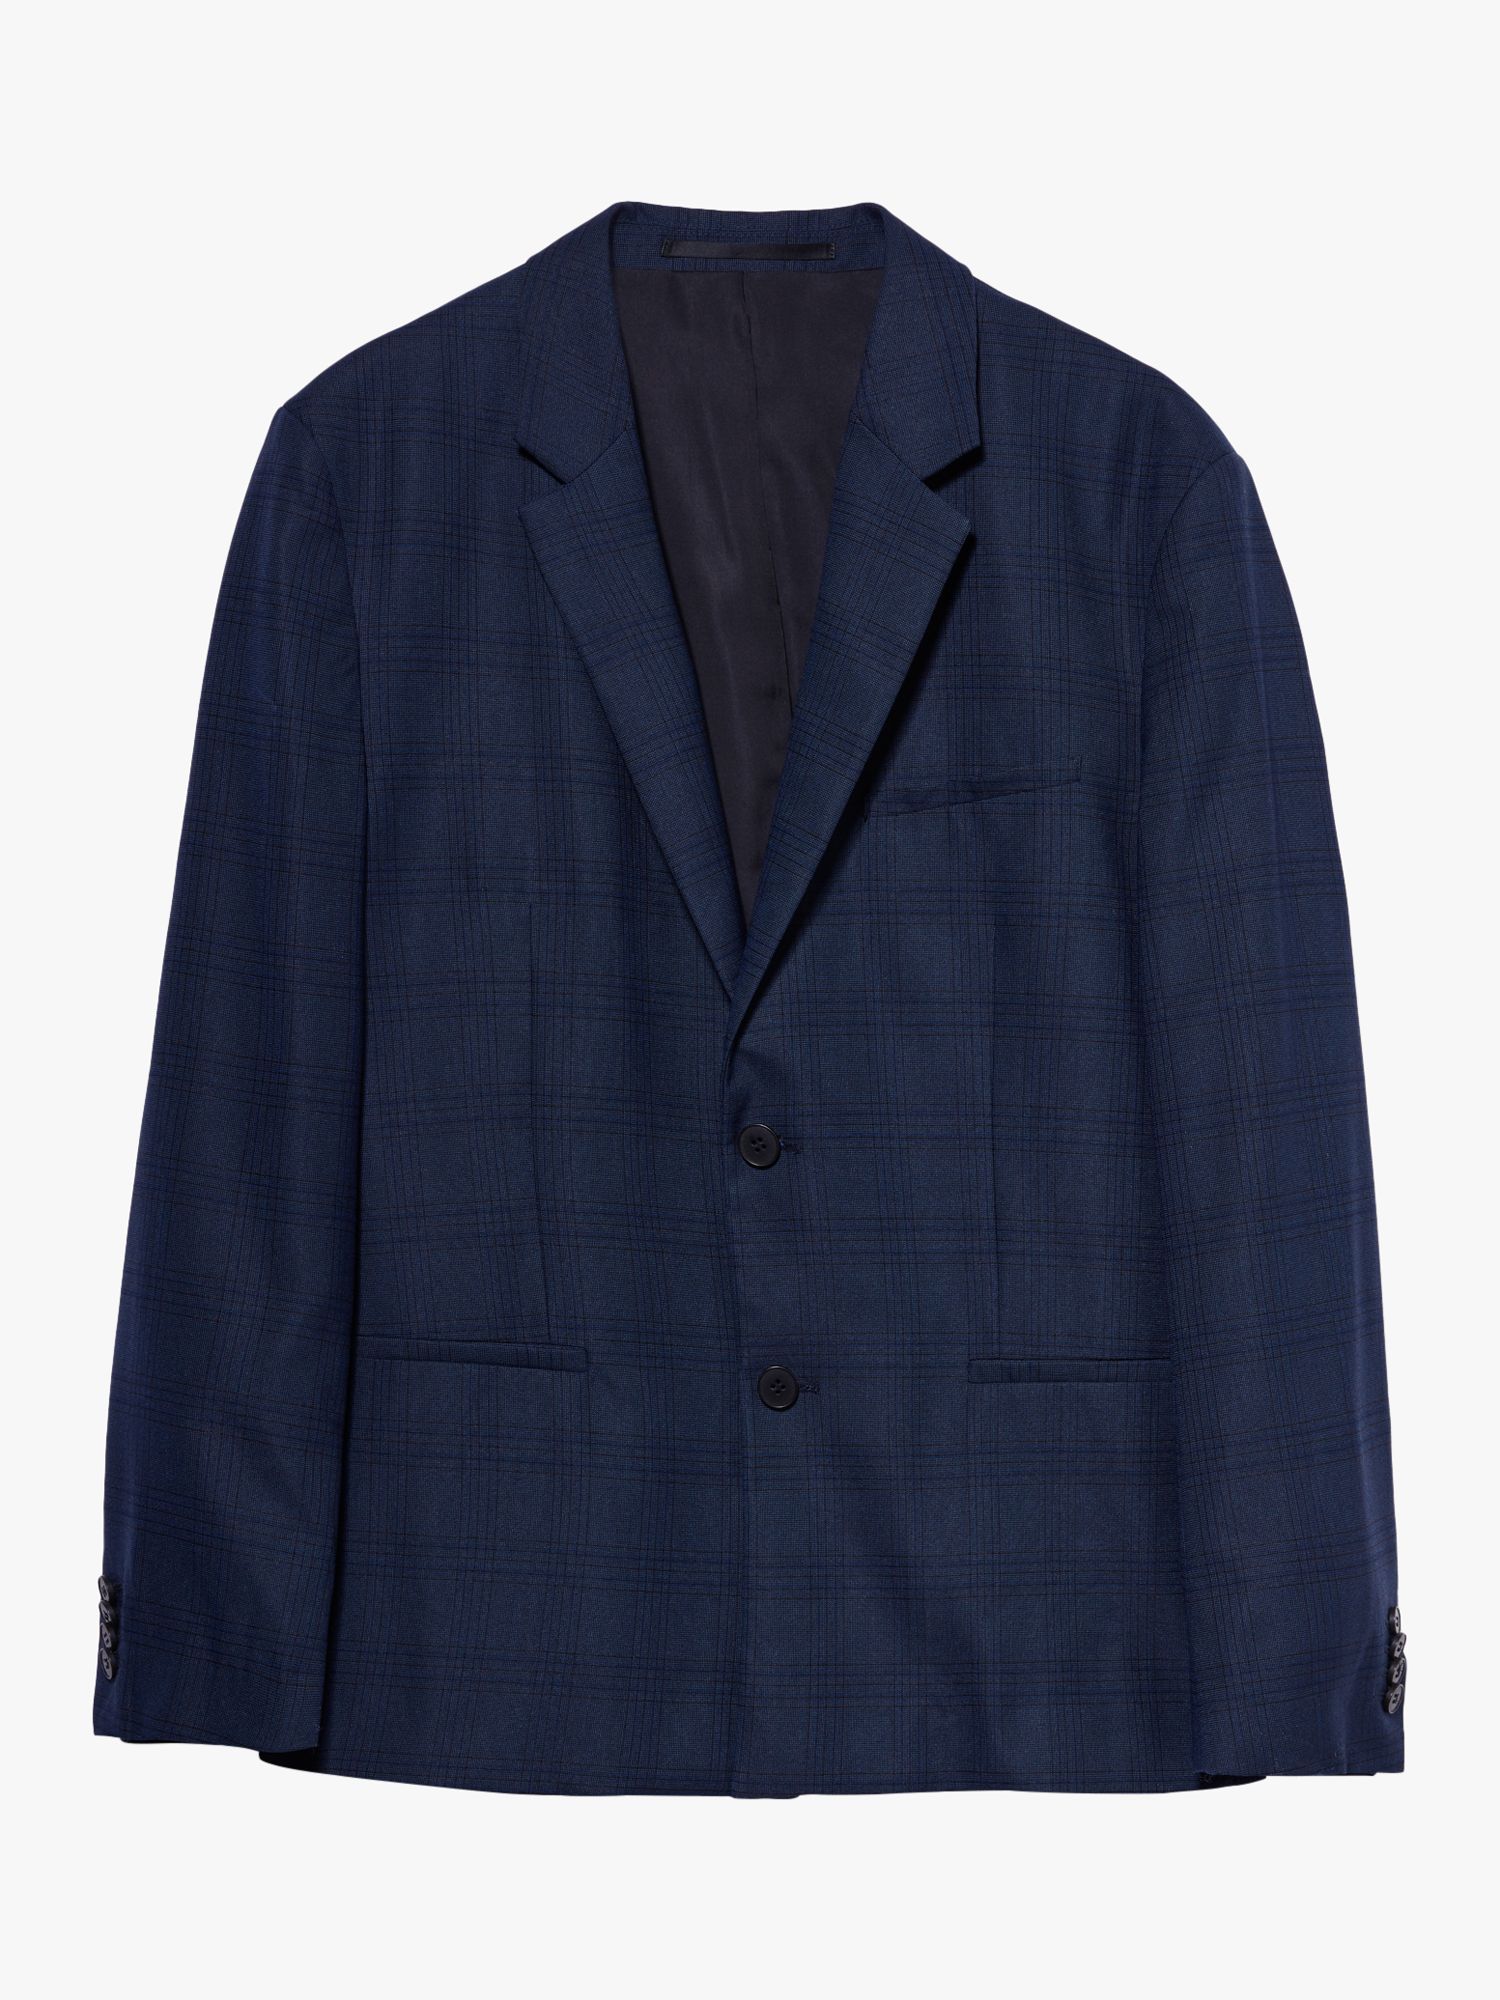 SISLEY Single Breast Slim Fit Suit Jacket, Blue, 52